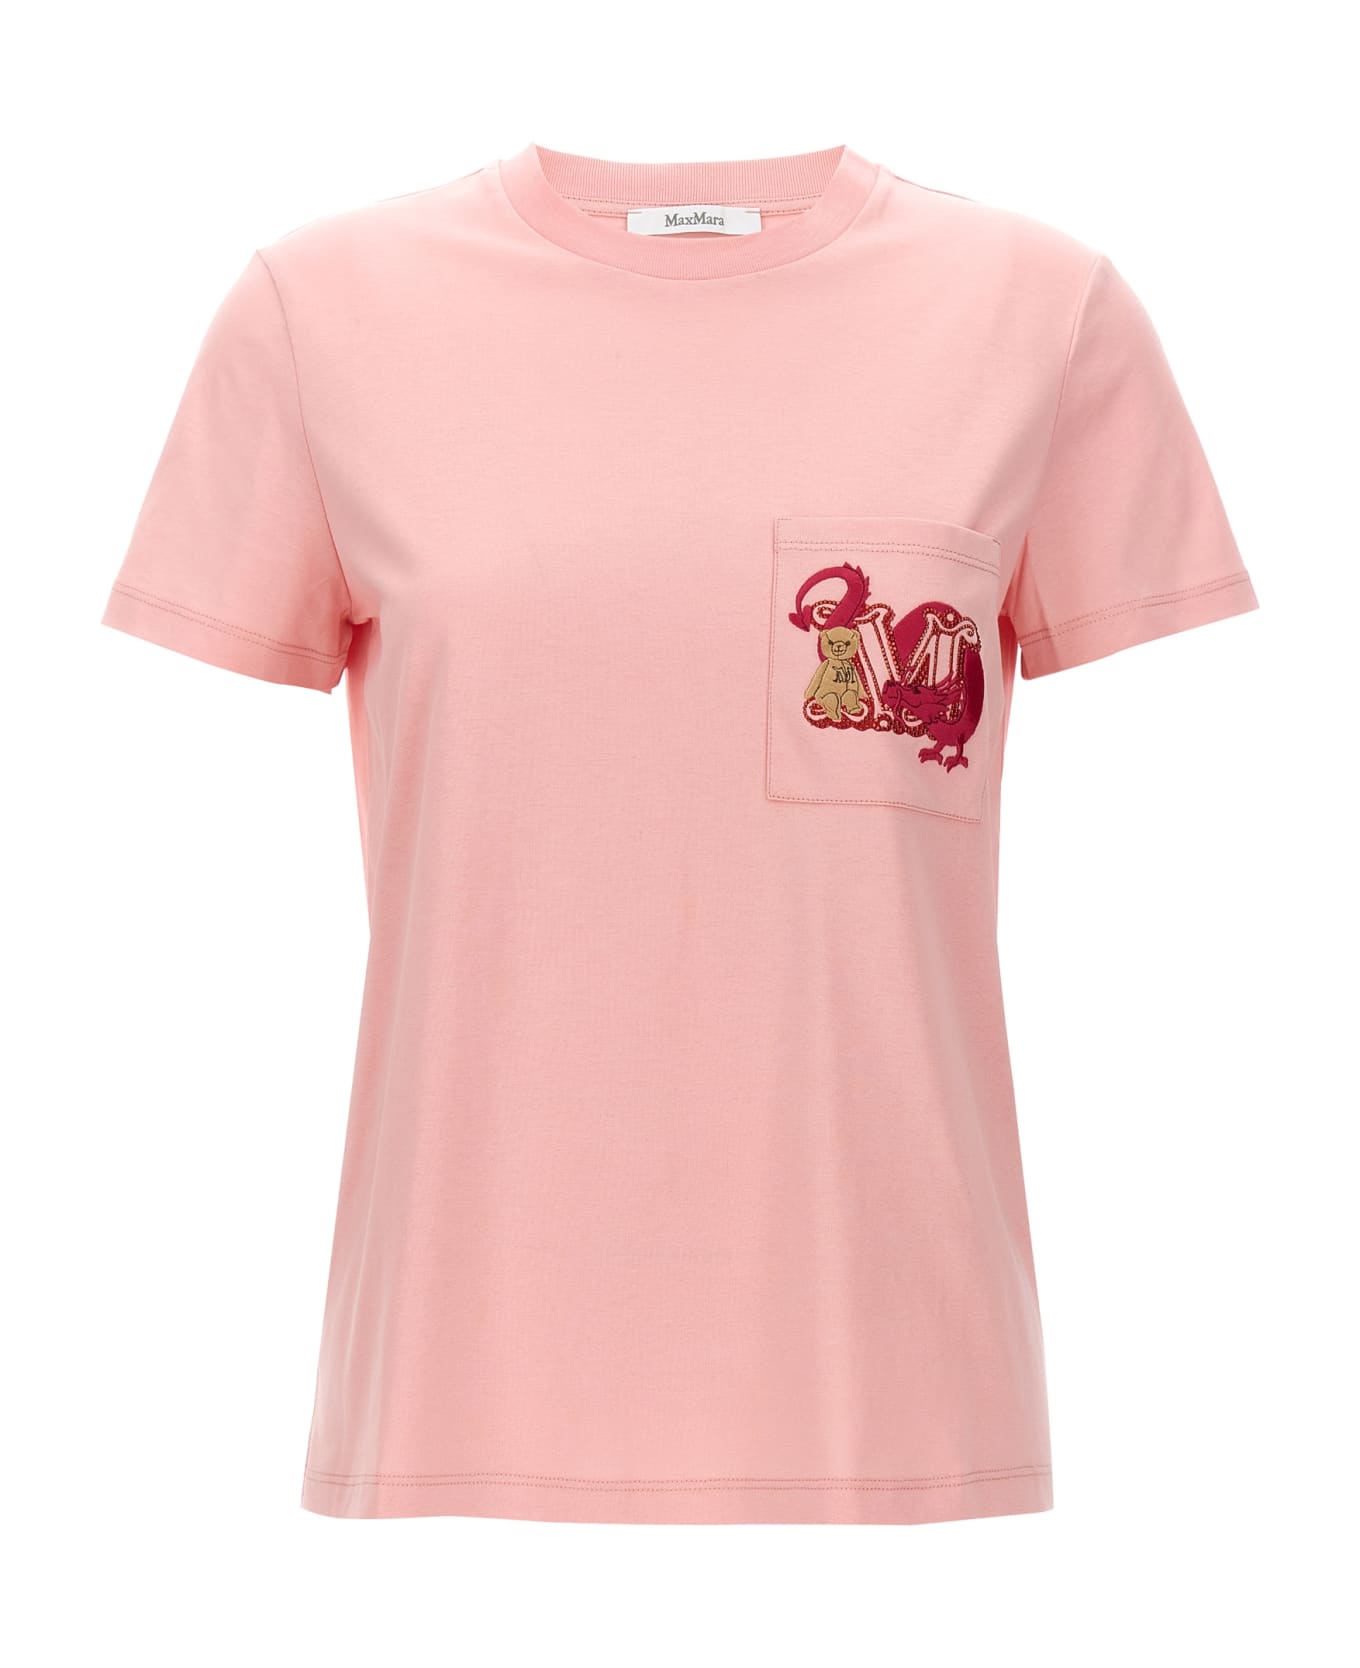 Max Mara 'elmo' T-shirt - Pink Tシャツ